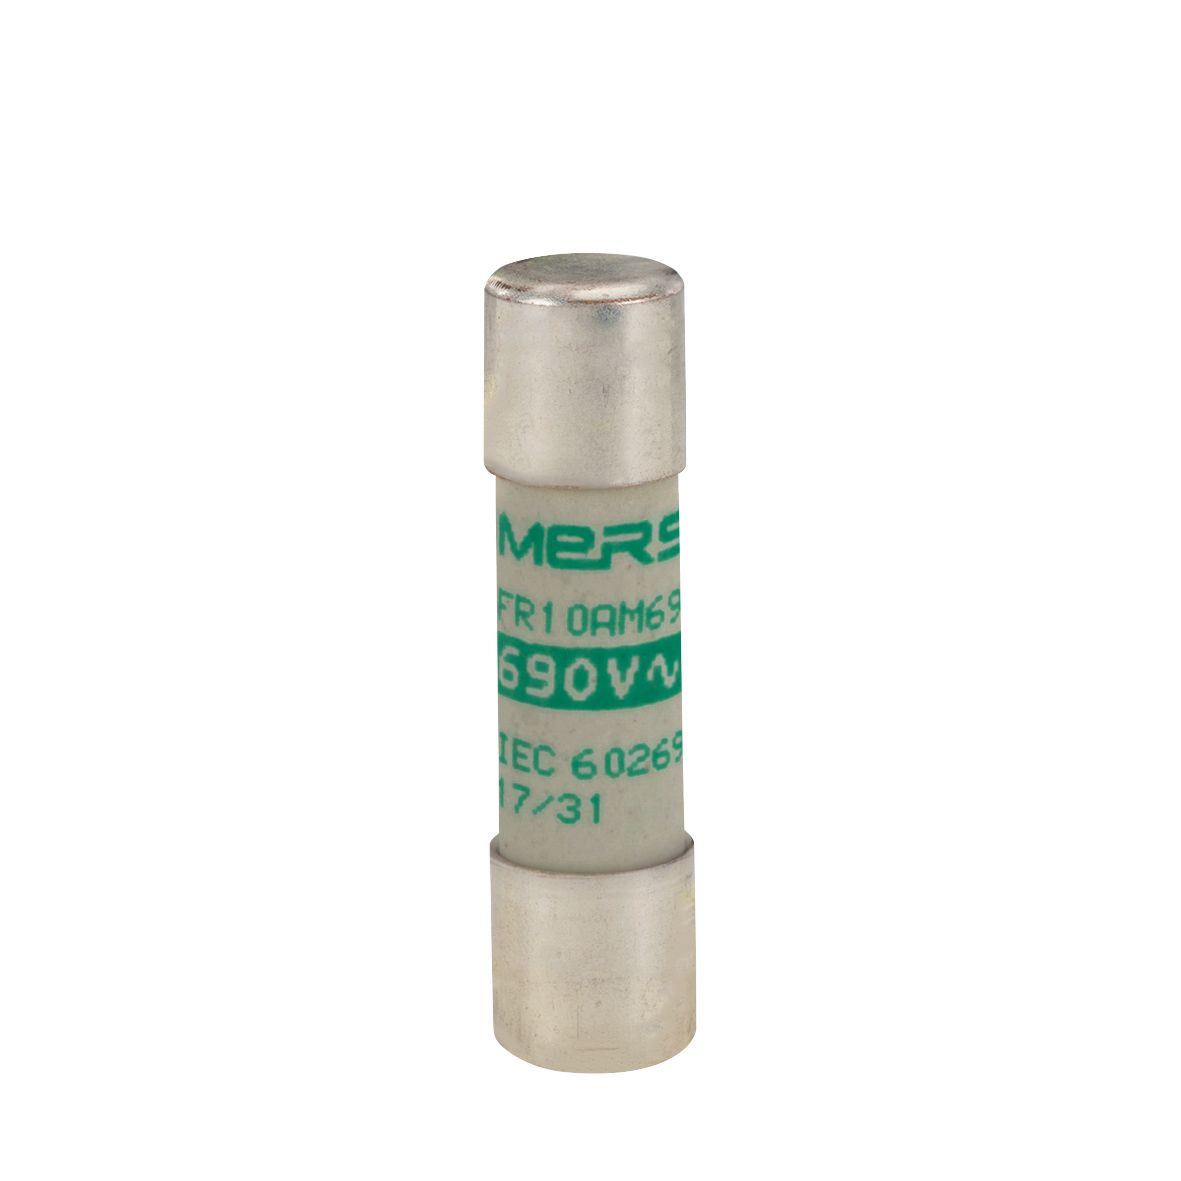 M302783 - Cylindrical fuse-link aM 690VAC 10.3x38, 8A